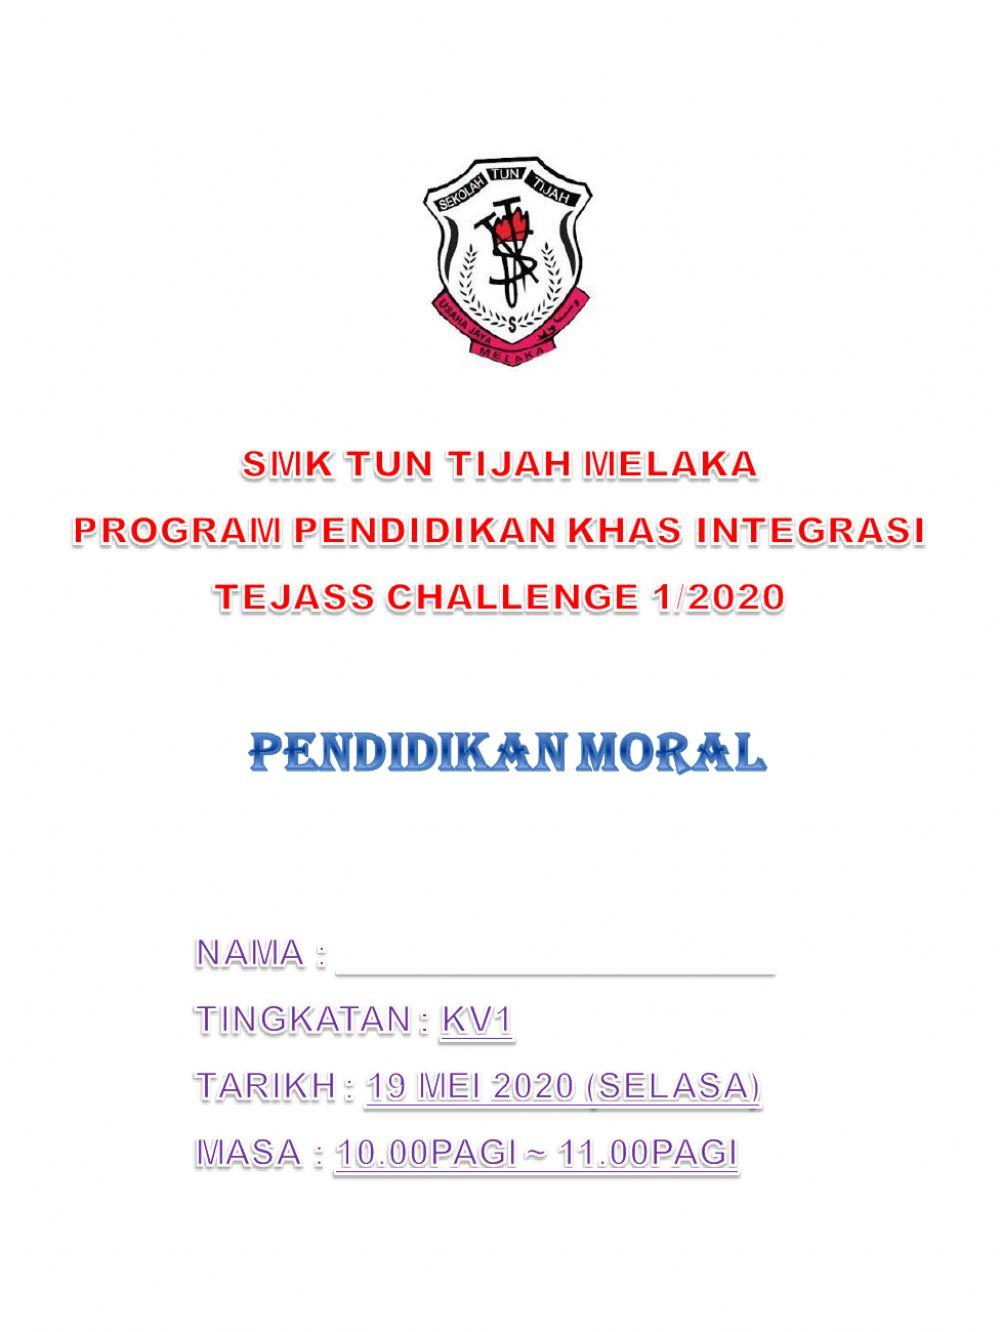 Soalan pm tejass challenge 1-2020